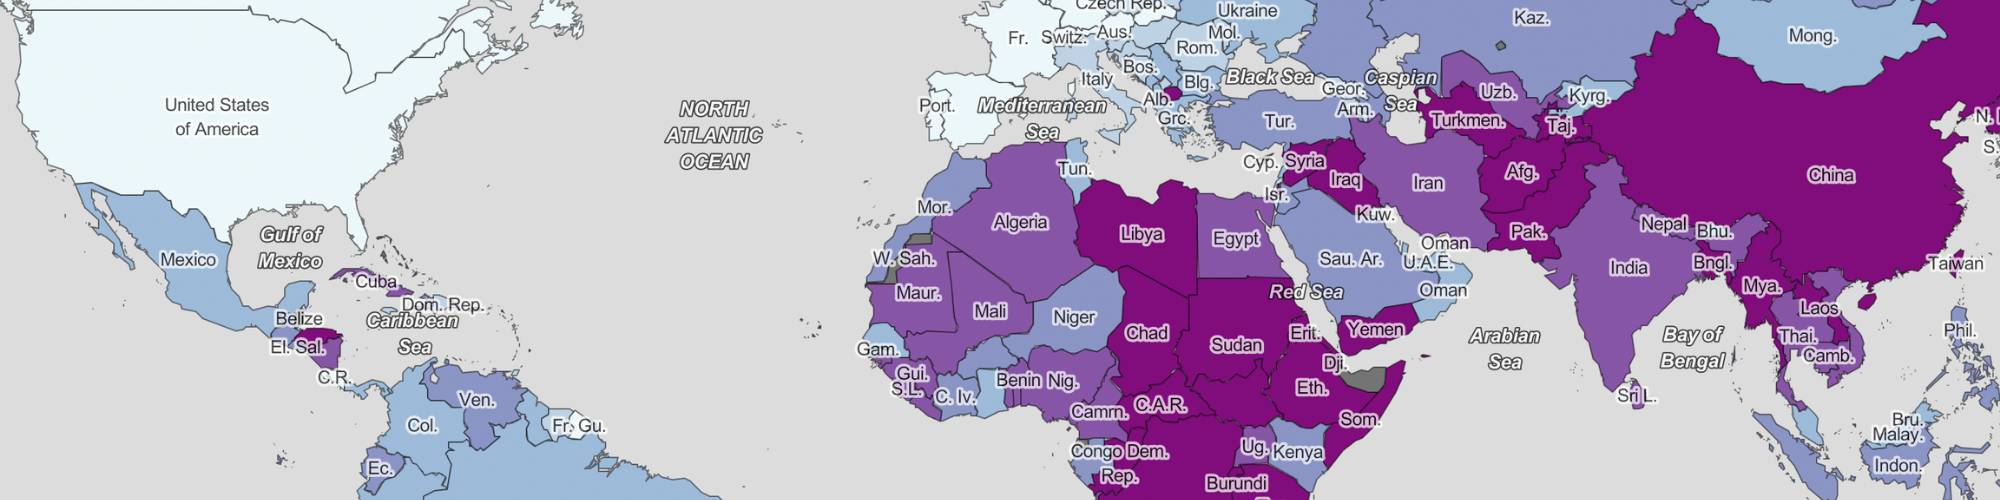 Global Civil Discourse Map link